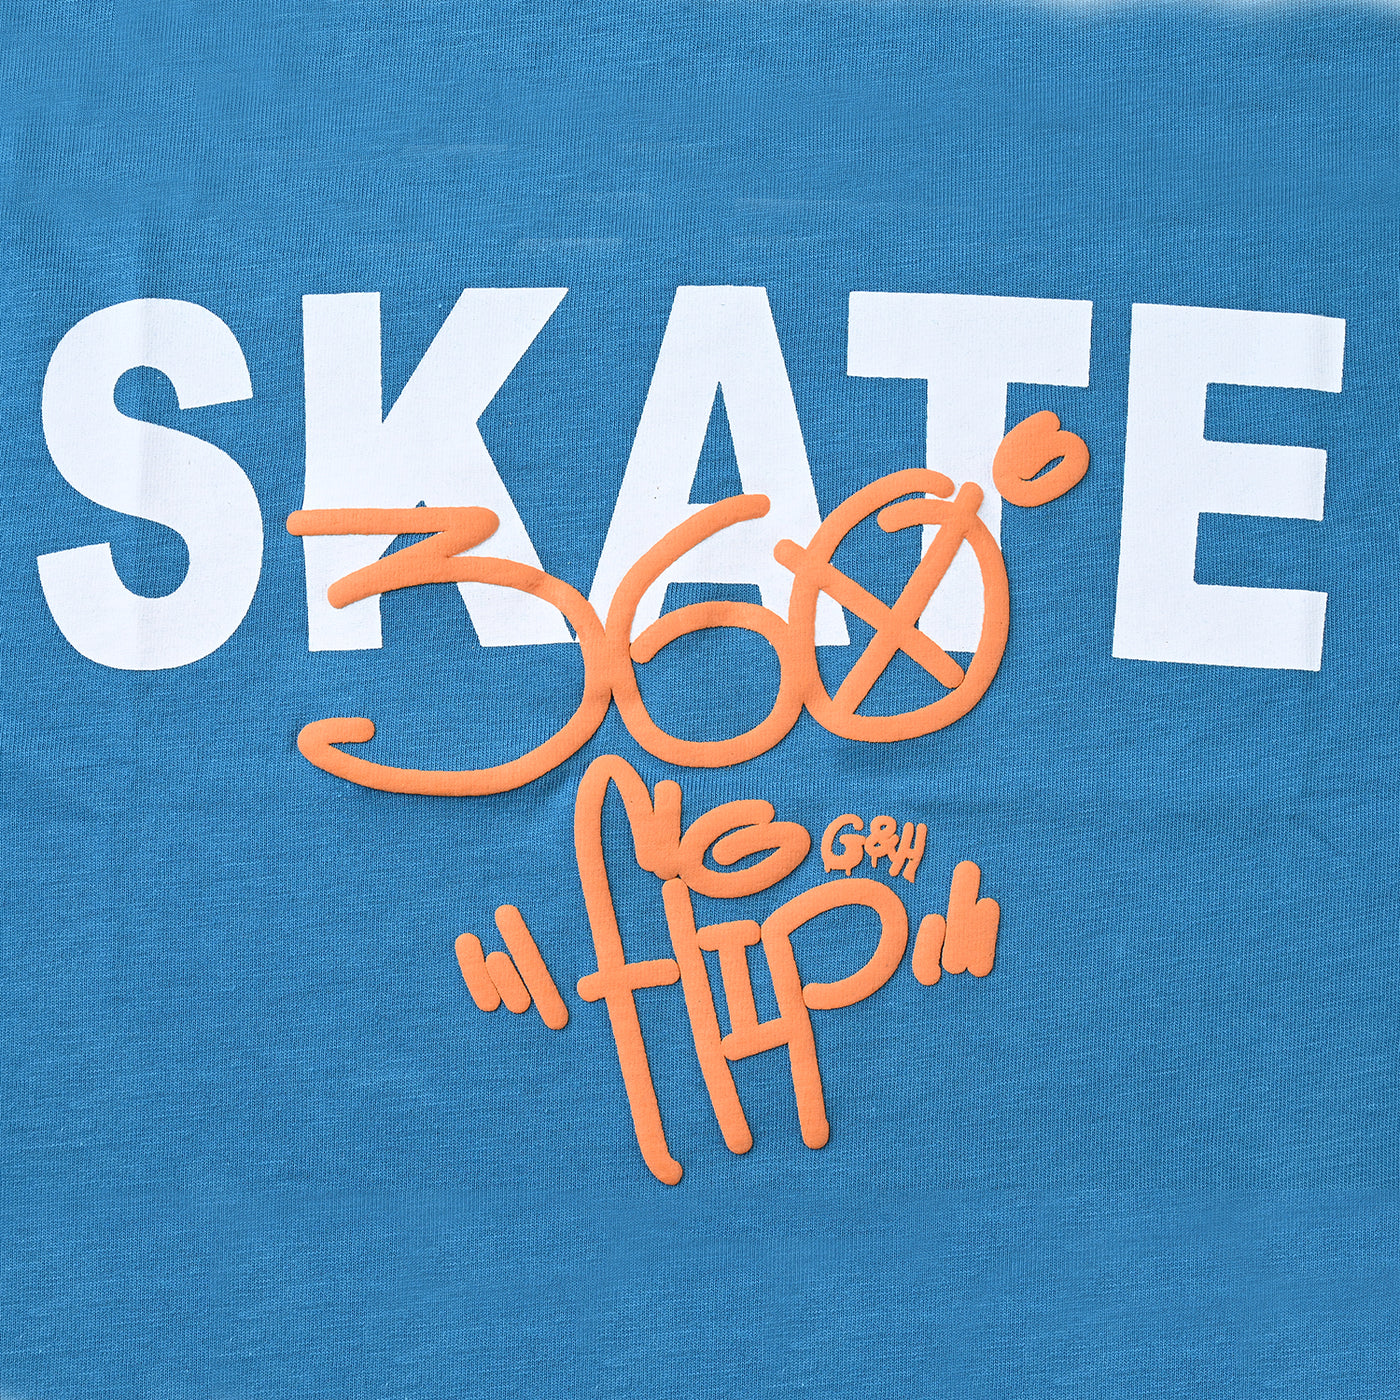 Boys Cotton Jersey T-Shirt H/S Skate 360 Flip-Fjord Blue